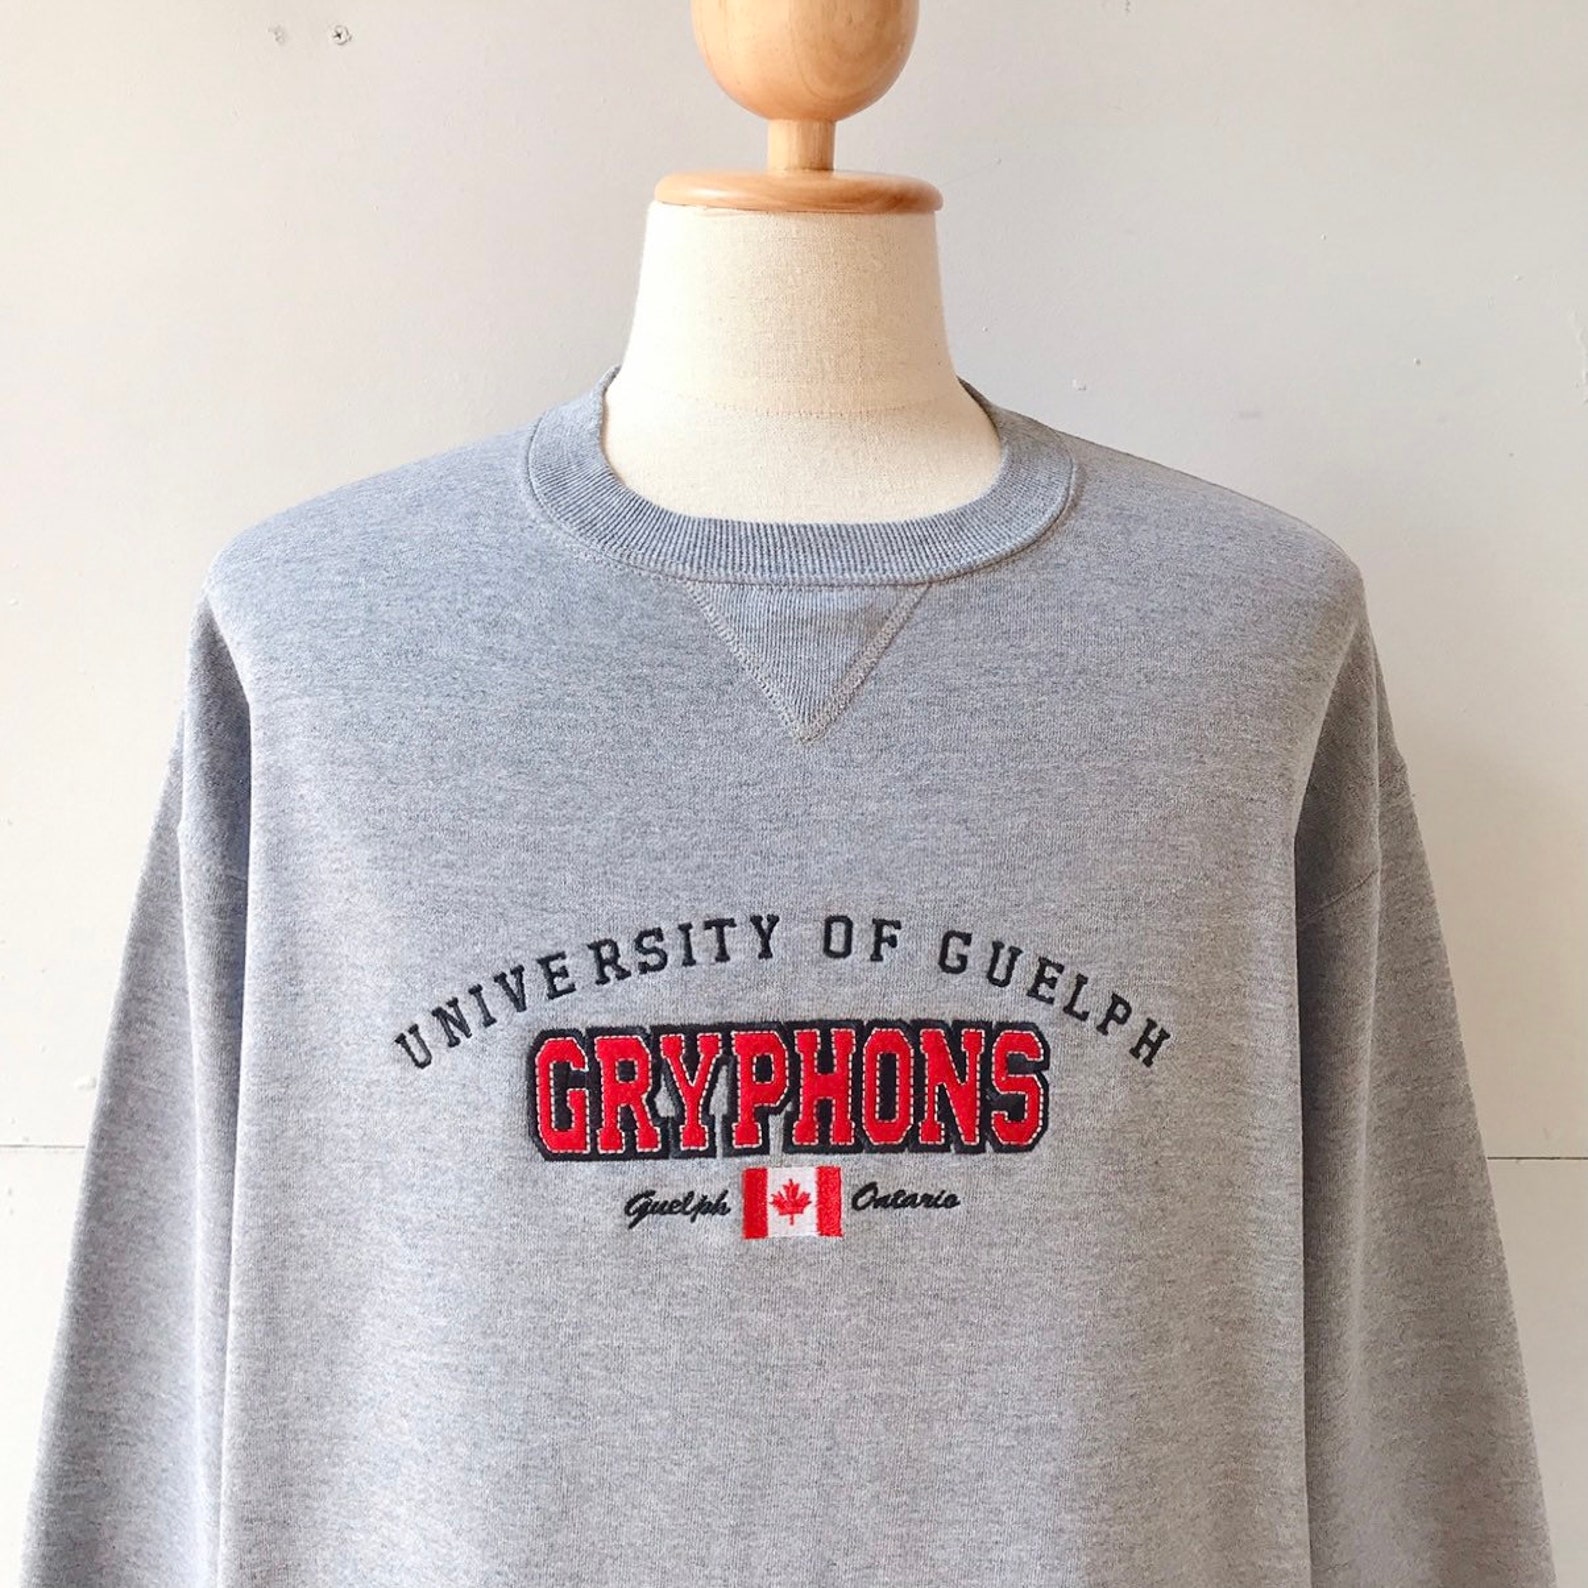 90s University Of Guelph Gryphons Sweatshirt size L | Etsy